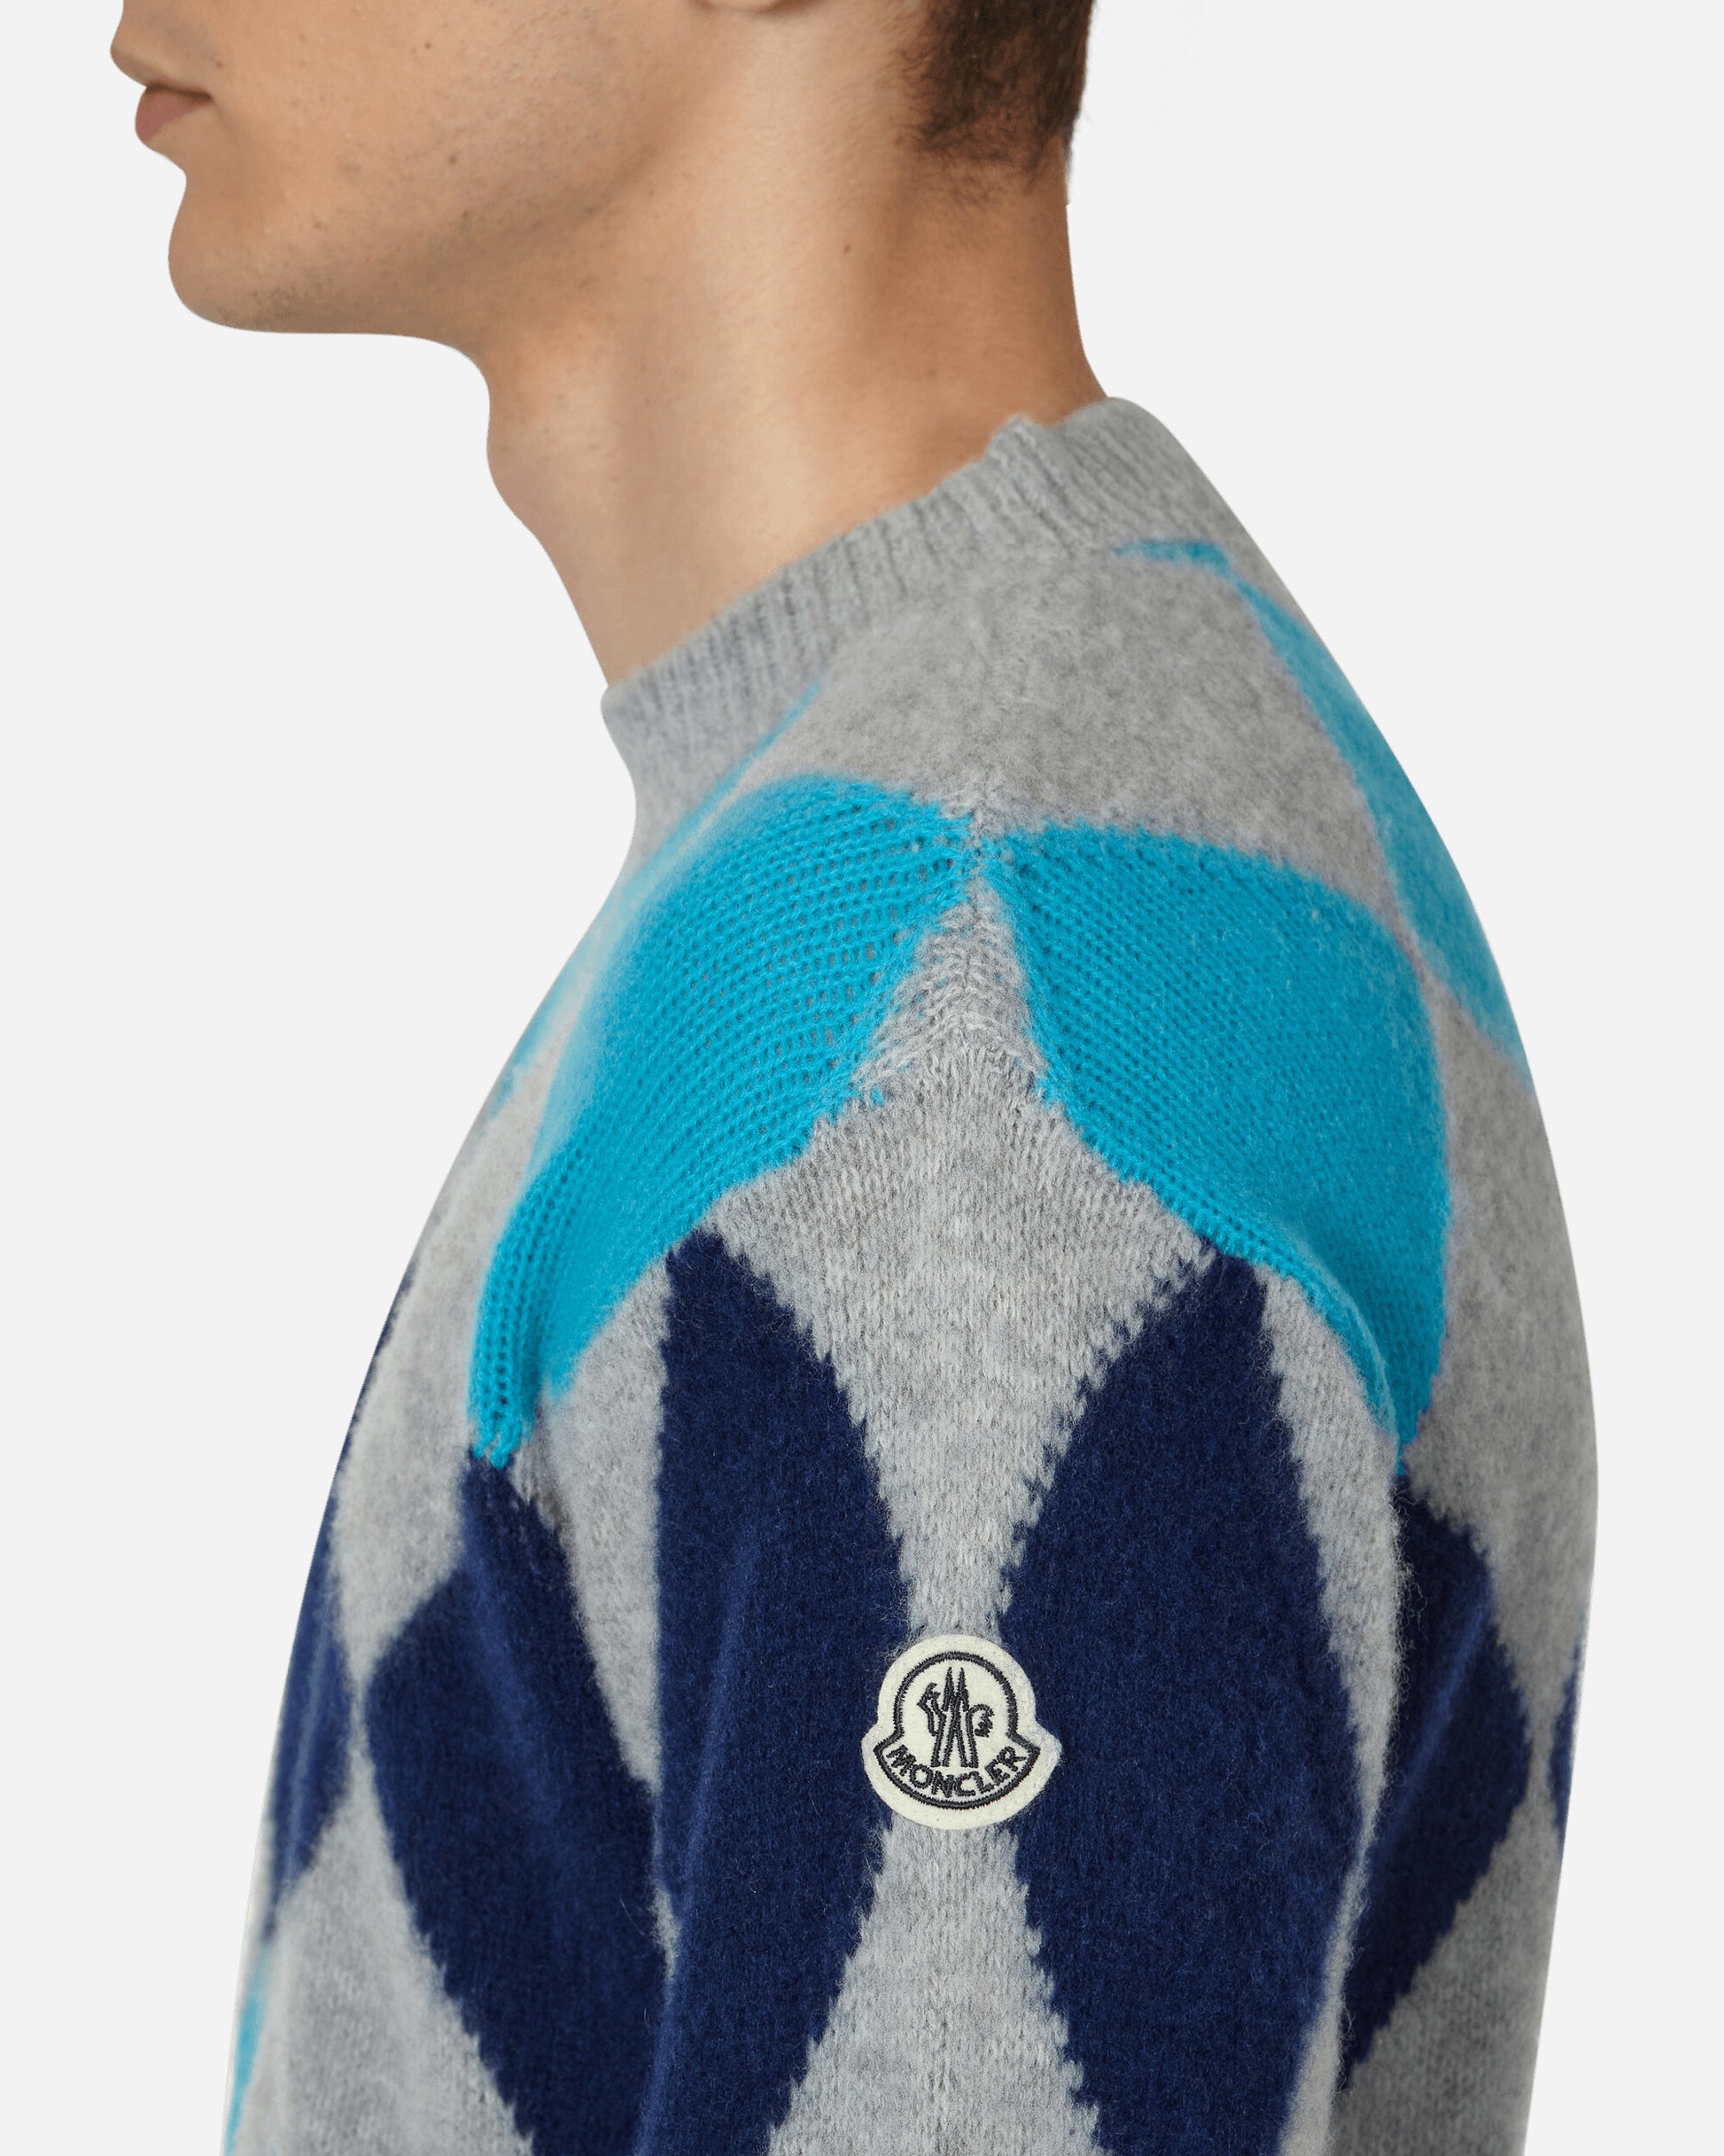 Moncler Genius Crewneck Sweater X Fragment Blue Knitwears Sweaters 9C00001M1127 P07